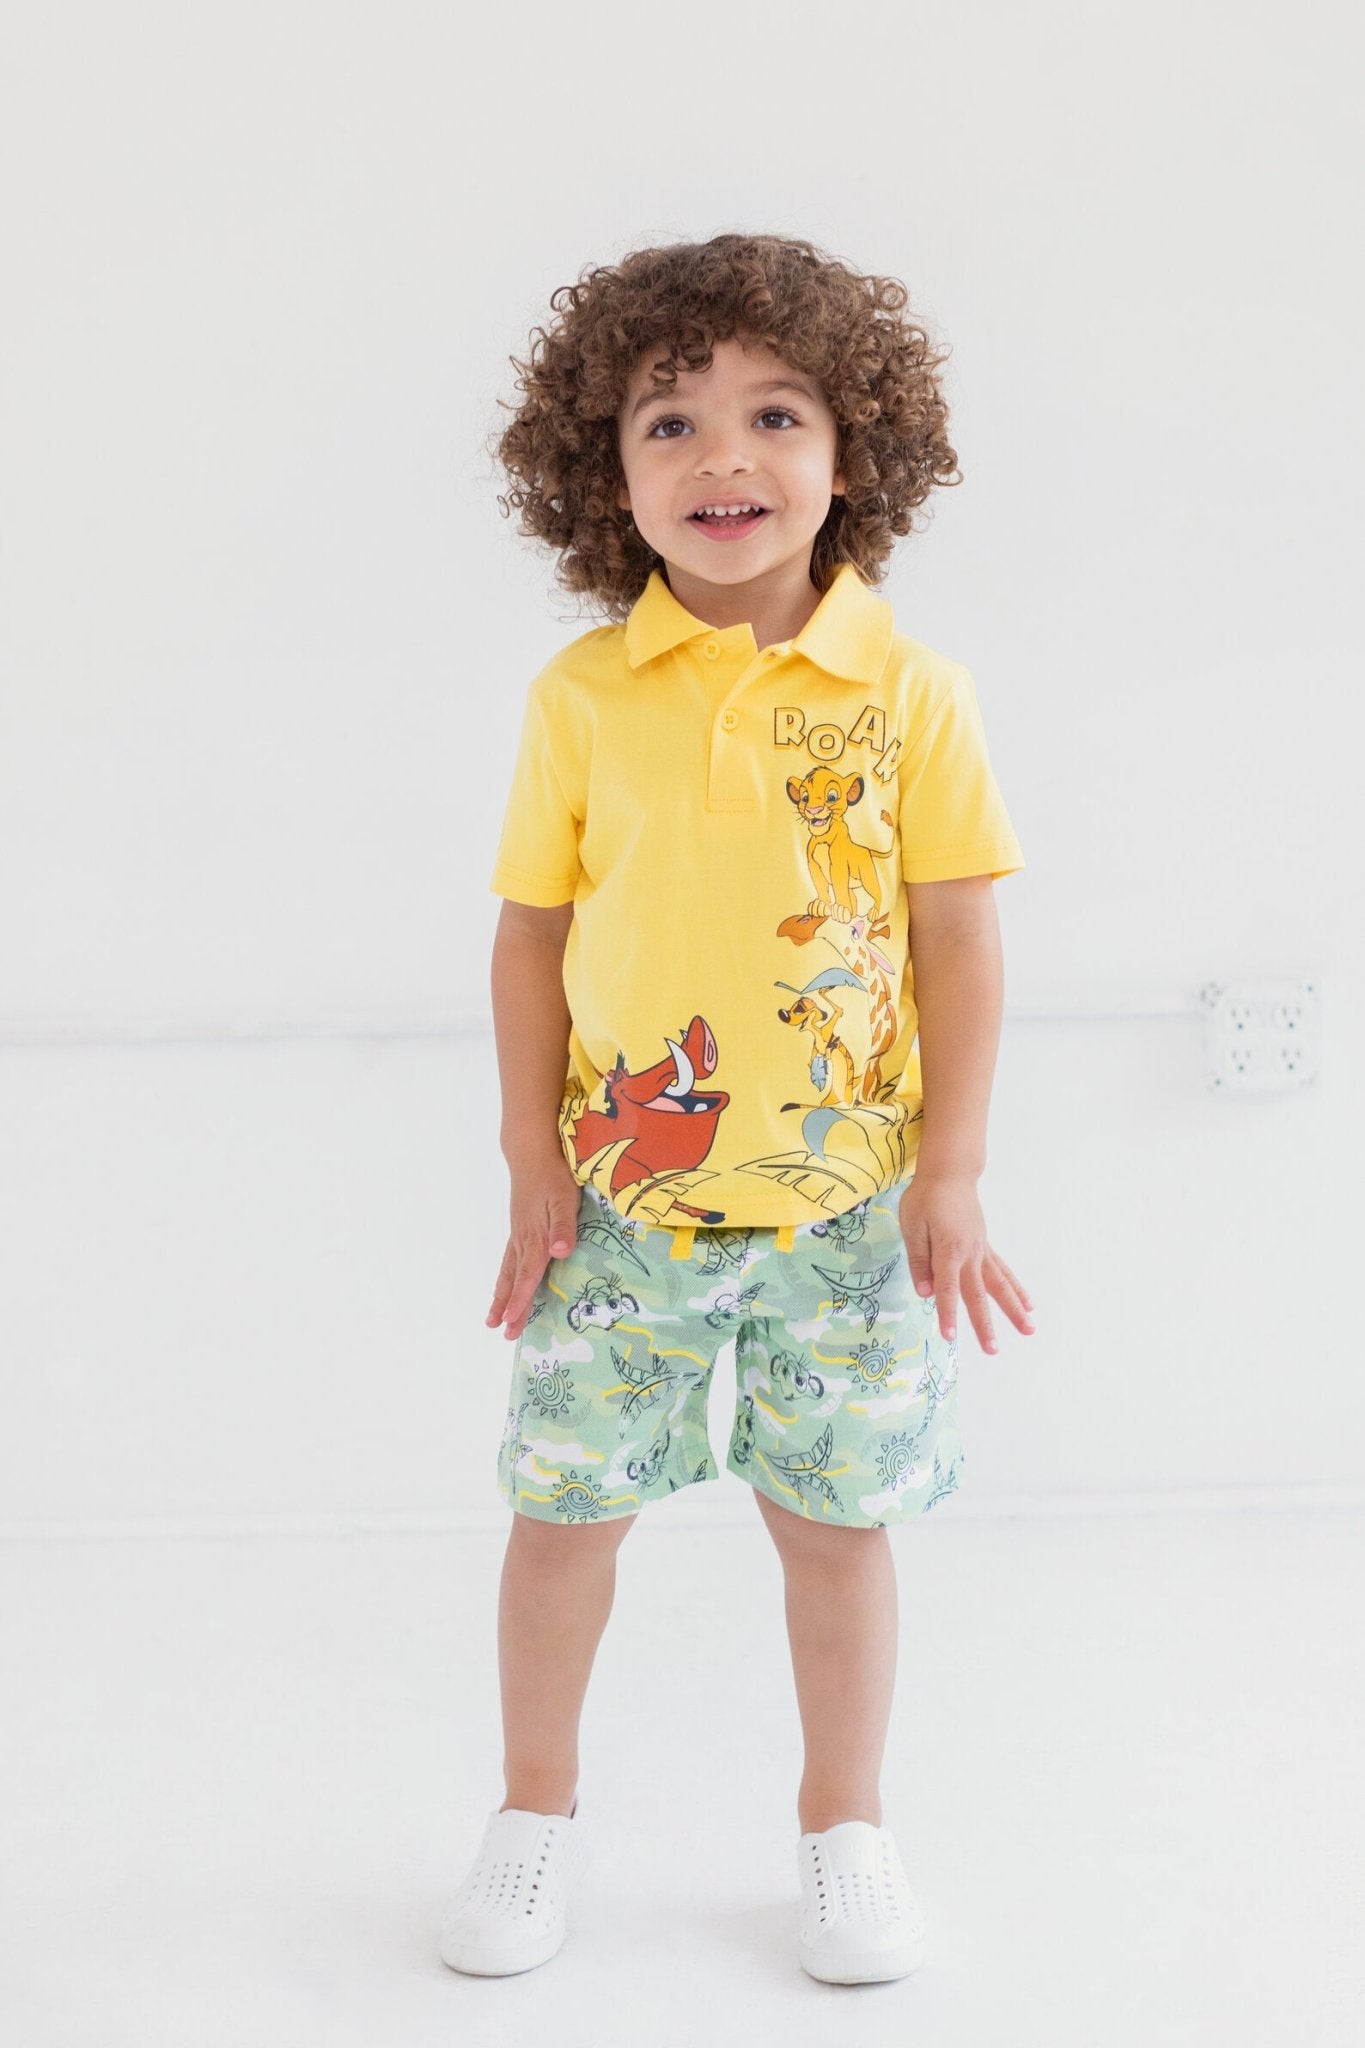 Disney Polo Shirt and Shorts Outfit Set - imagikids